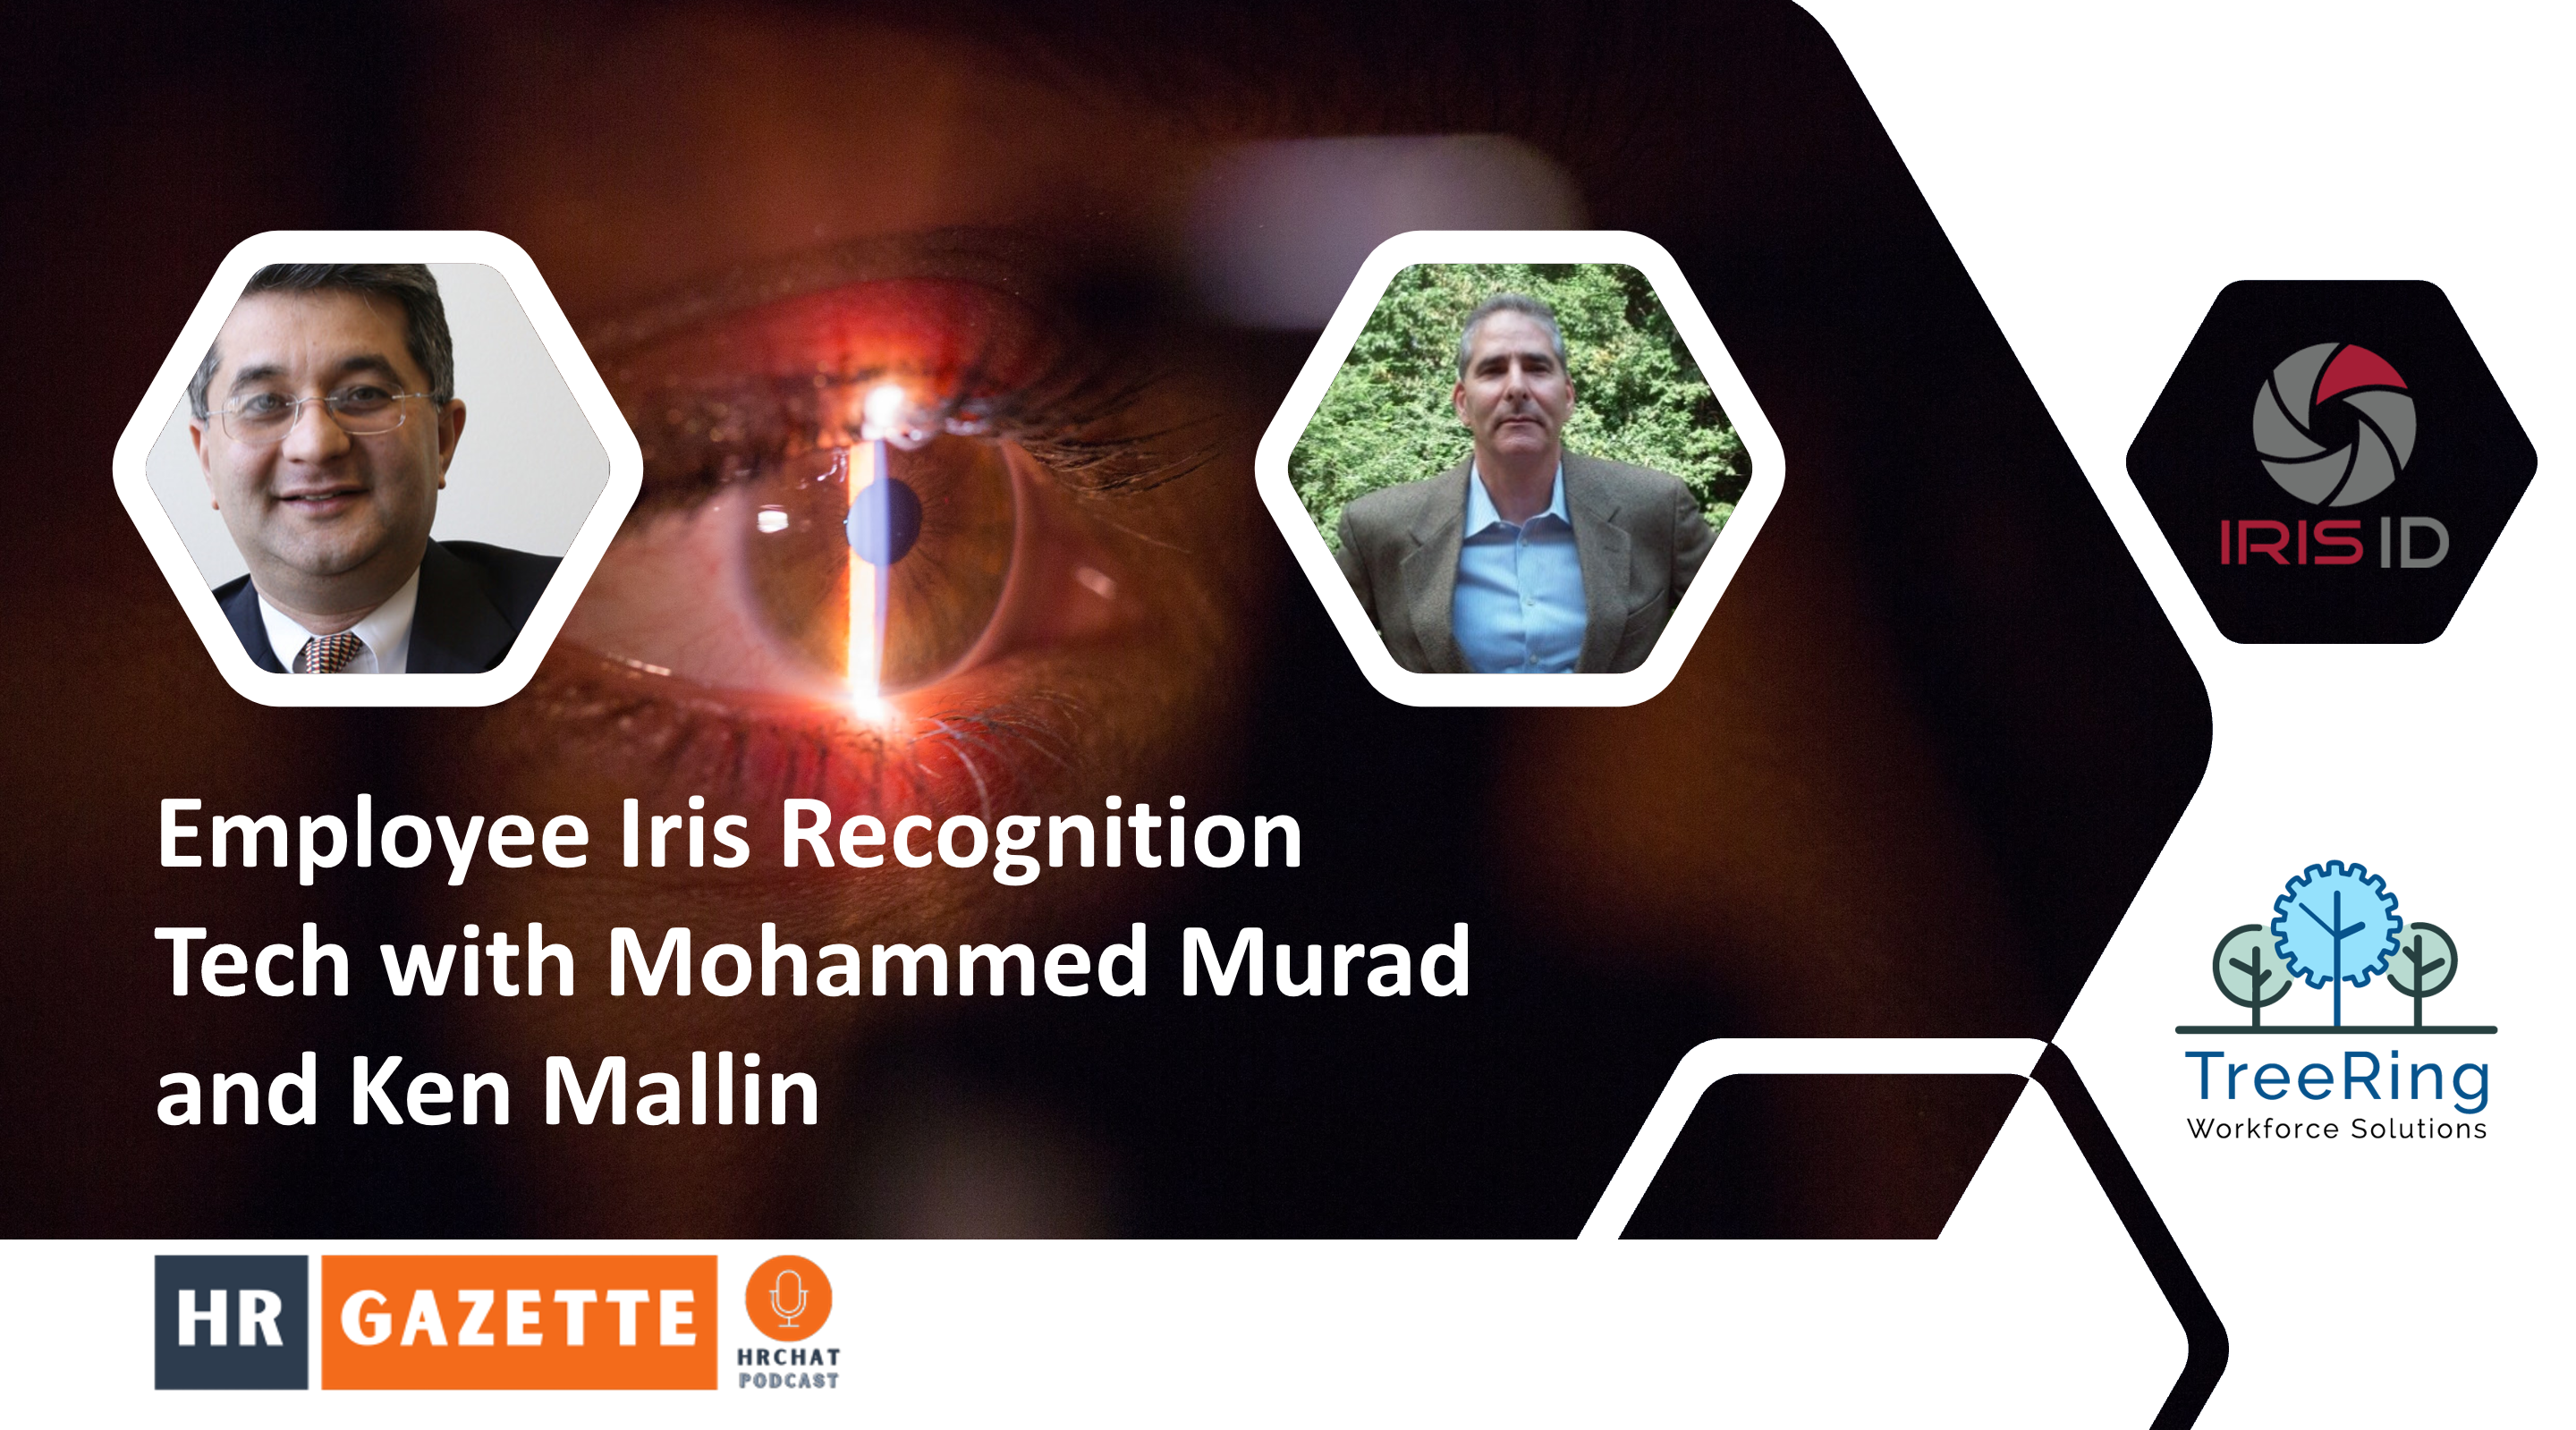 Employee Iris Recognition Tech with Mohammed Murad and Ken Mallin